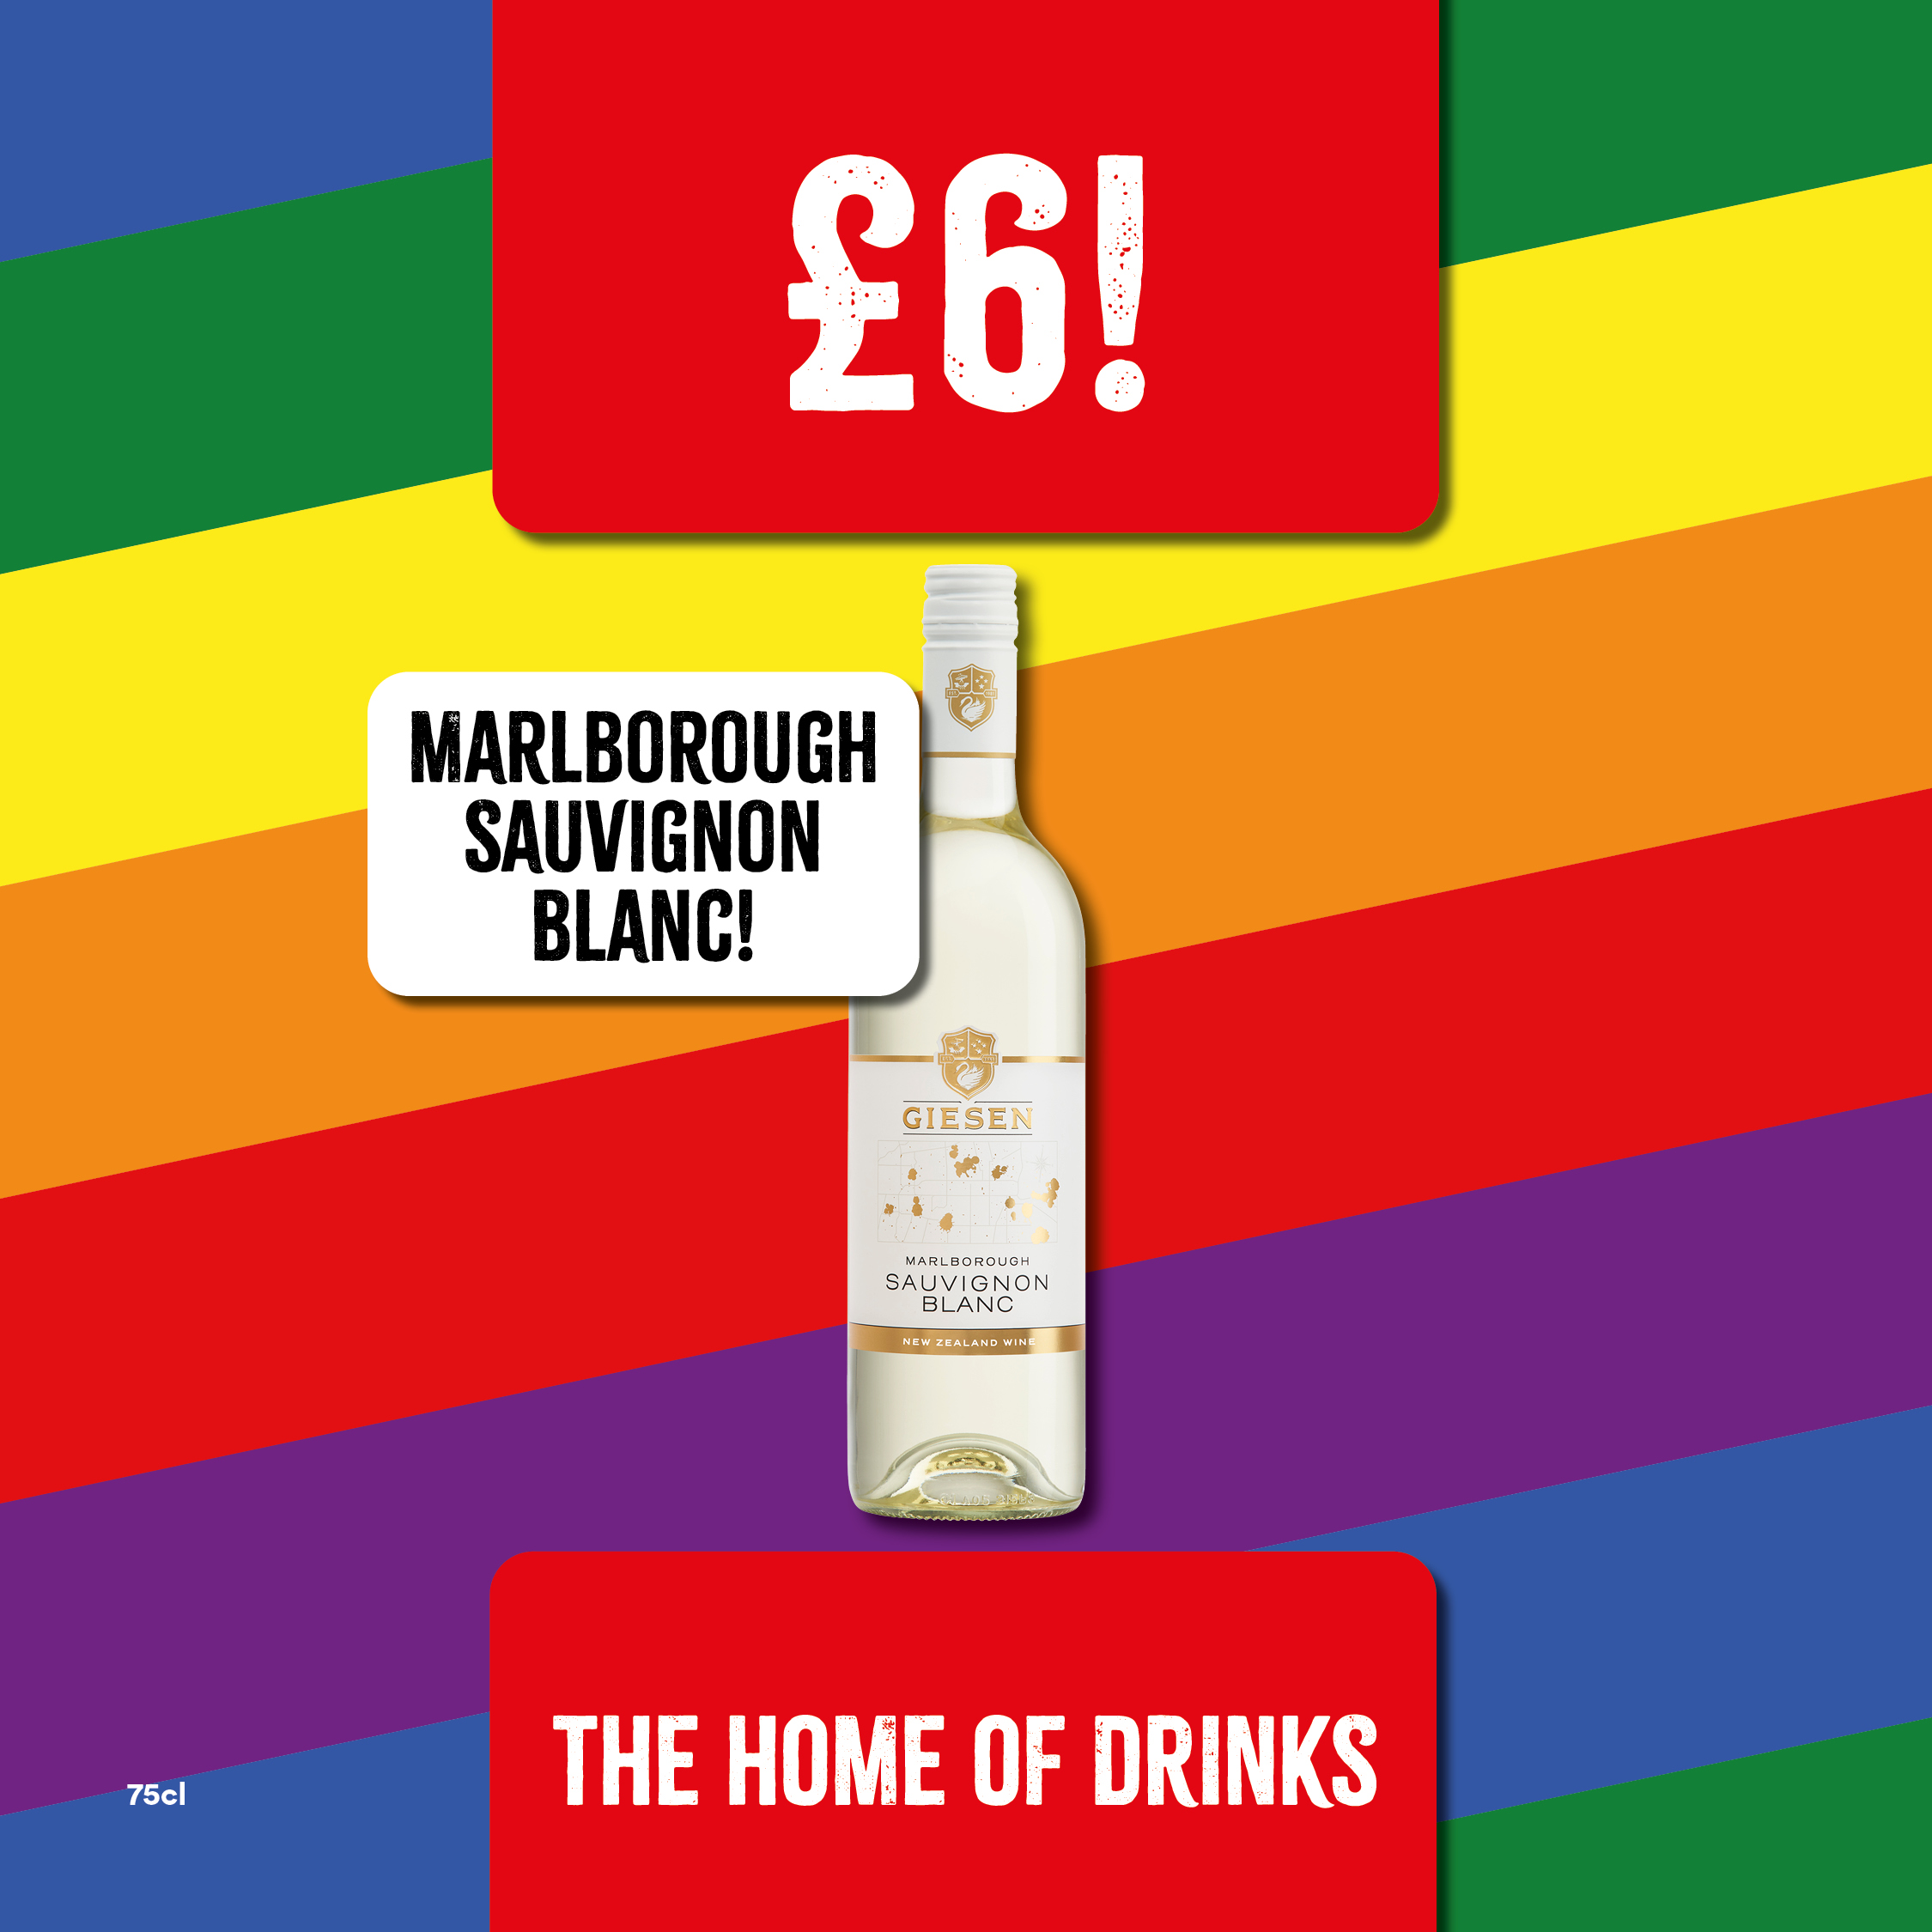 Only £6 Marlborough Sauvignon Blanc Bargain Booze Select Convenience Wigan 01942 497130